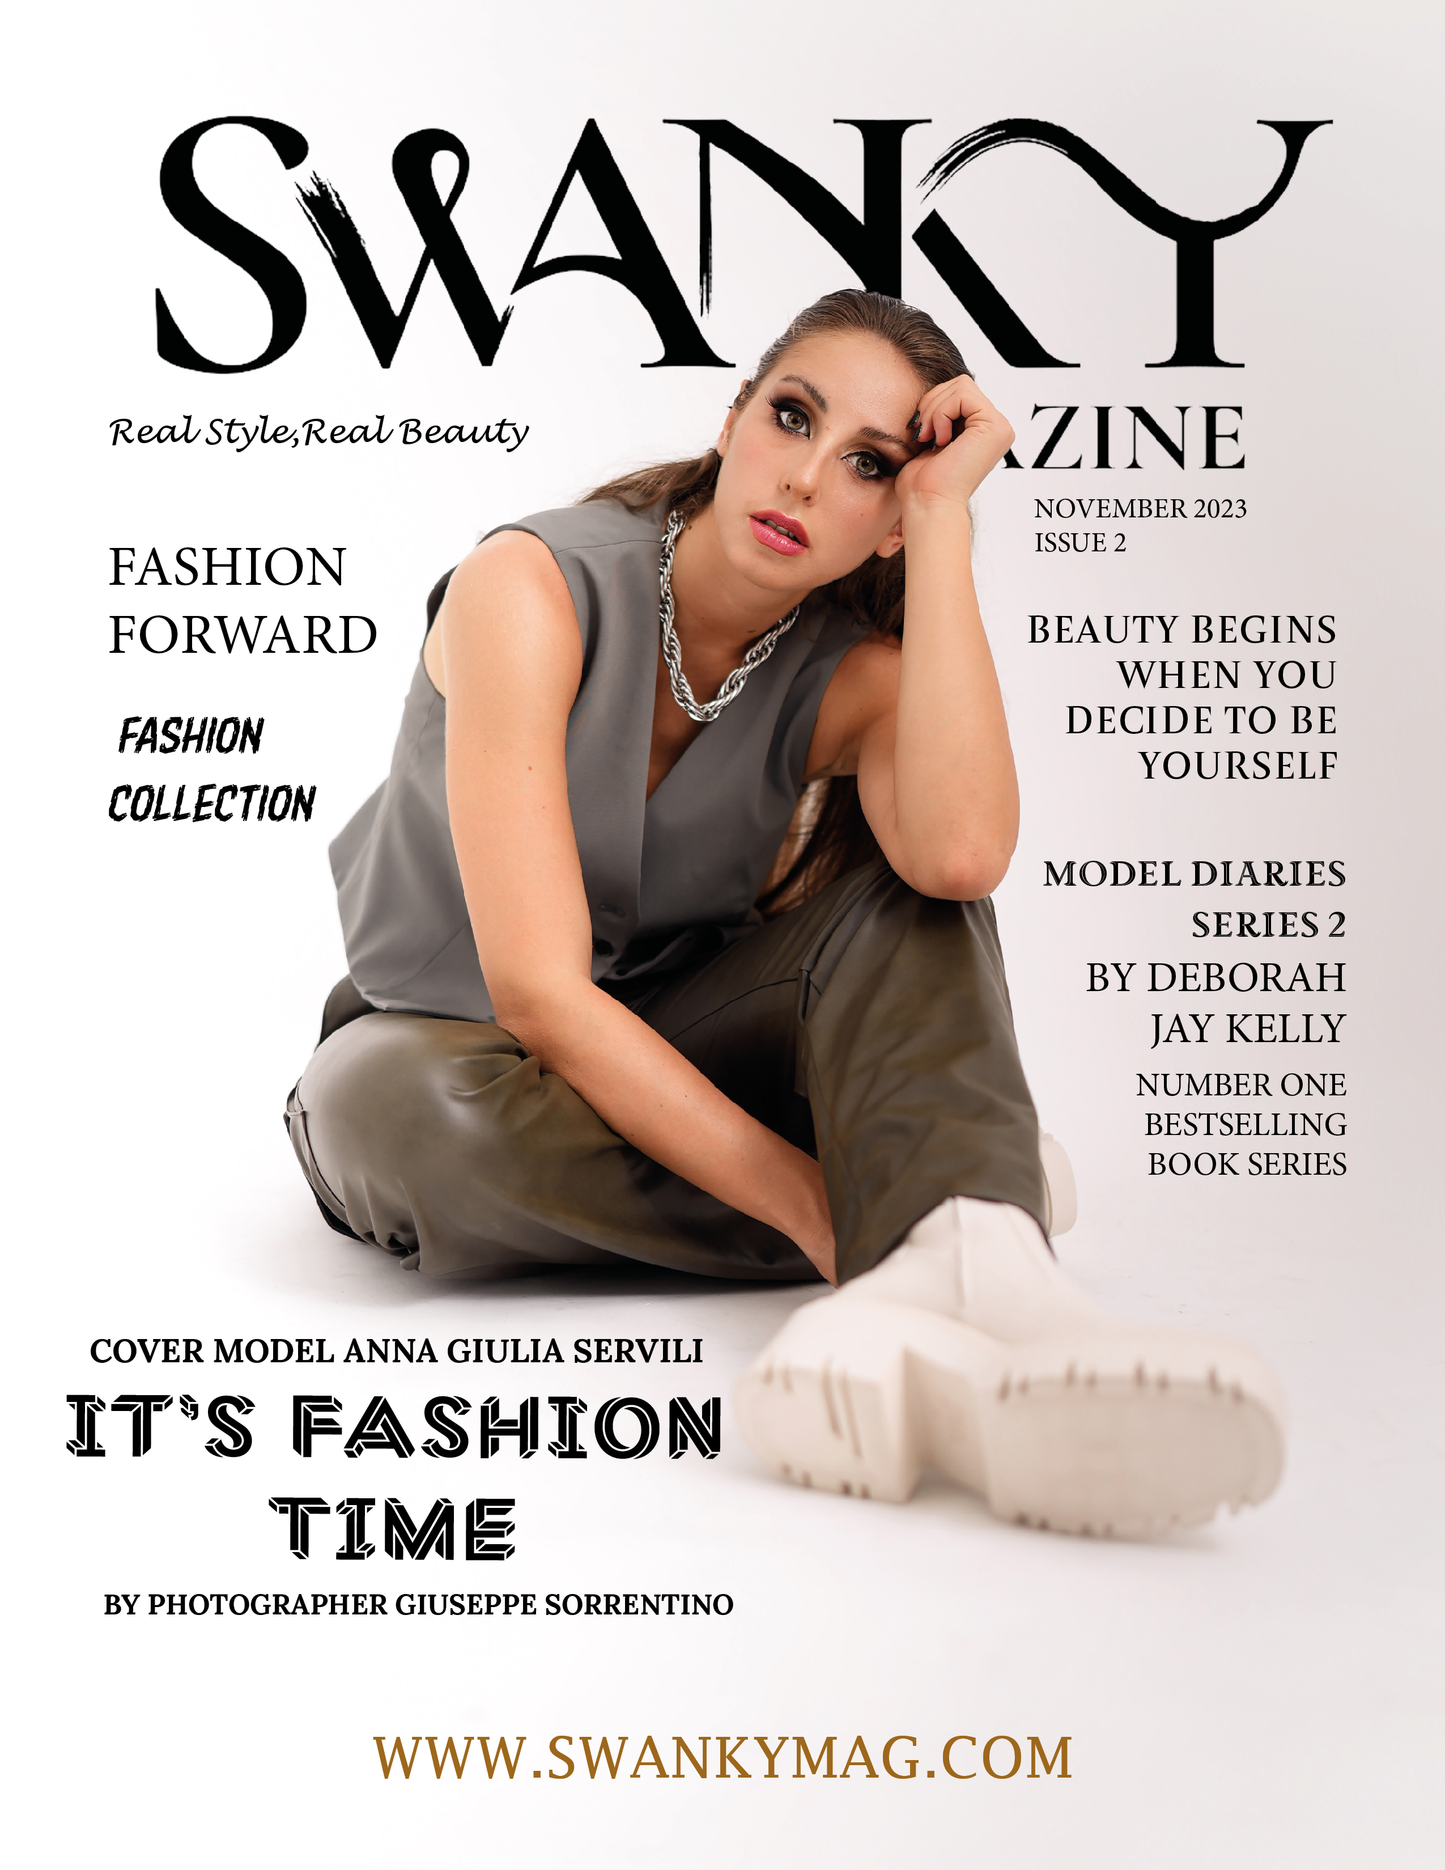 Swanky Fashion and Beauty Magazine: November 2023 Issue II